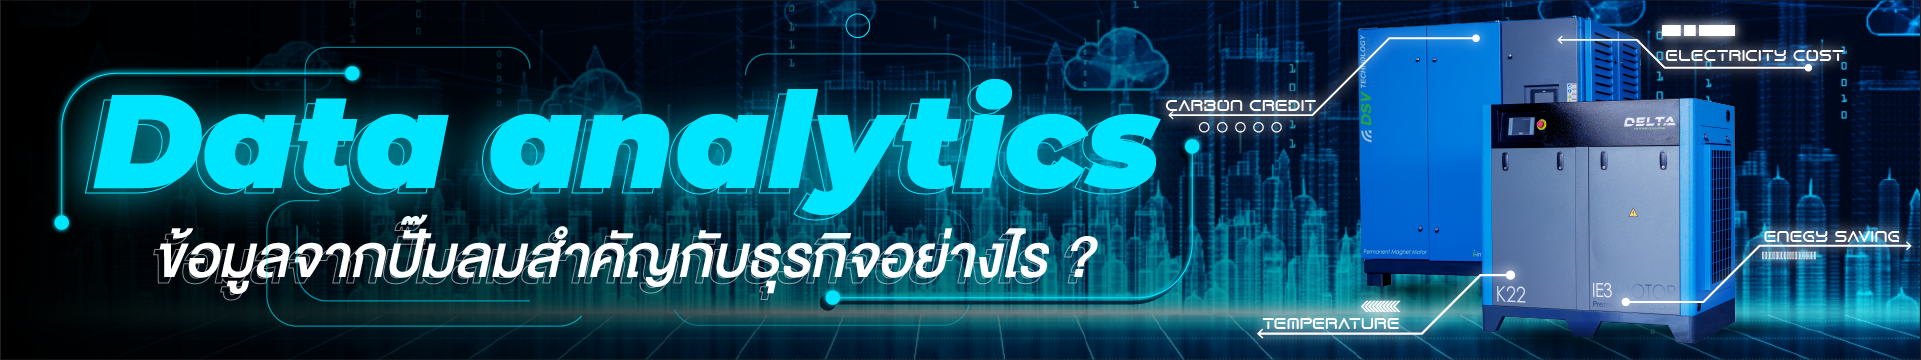  Data analytics ข้อมูลจากปั๊มลมสำคัญกับธุรกิจอย่างไร ?